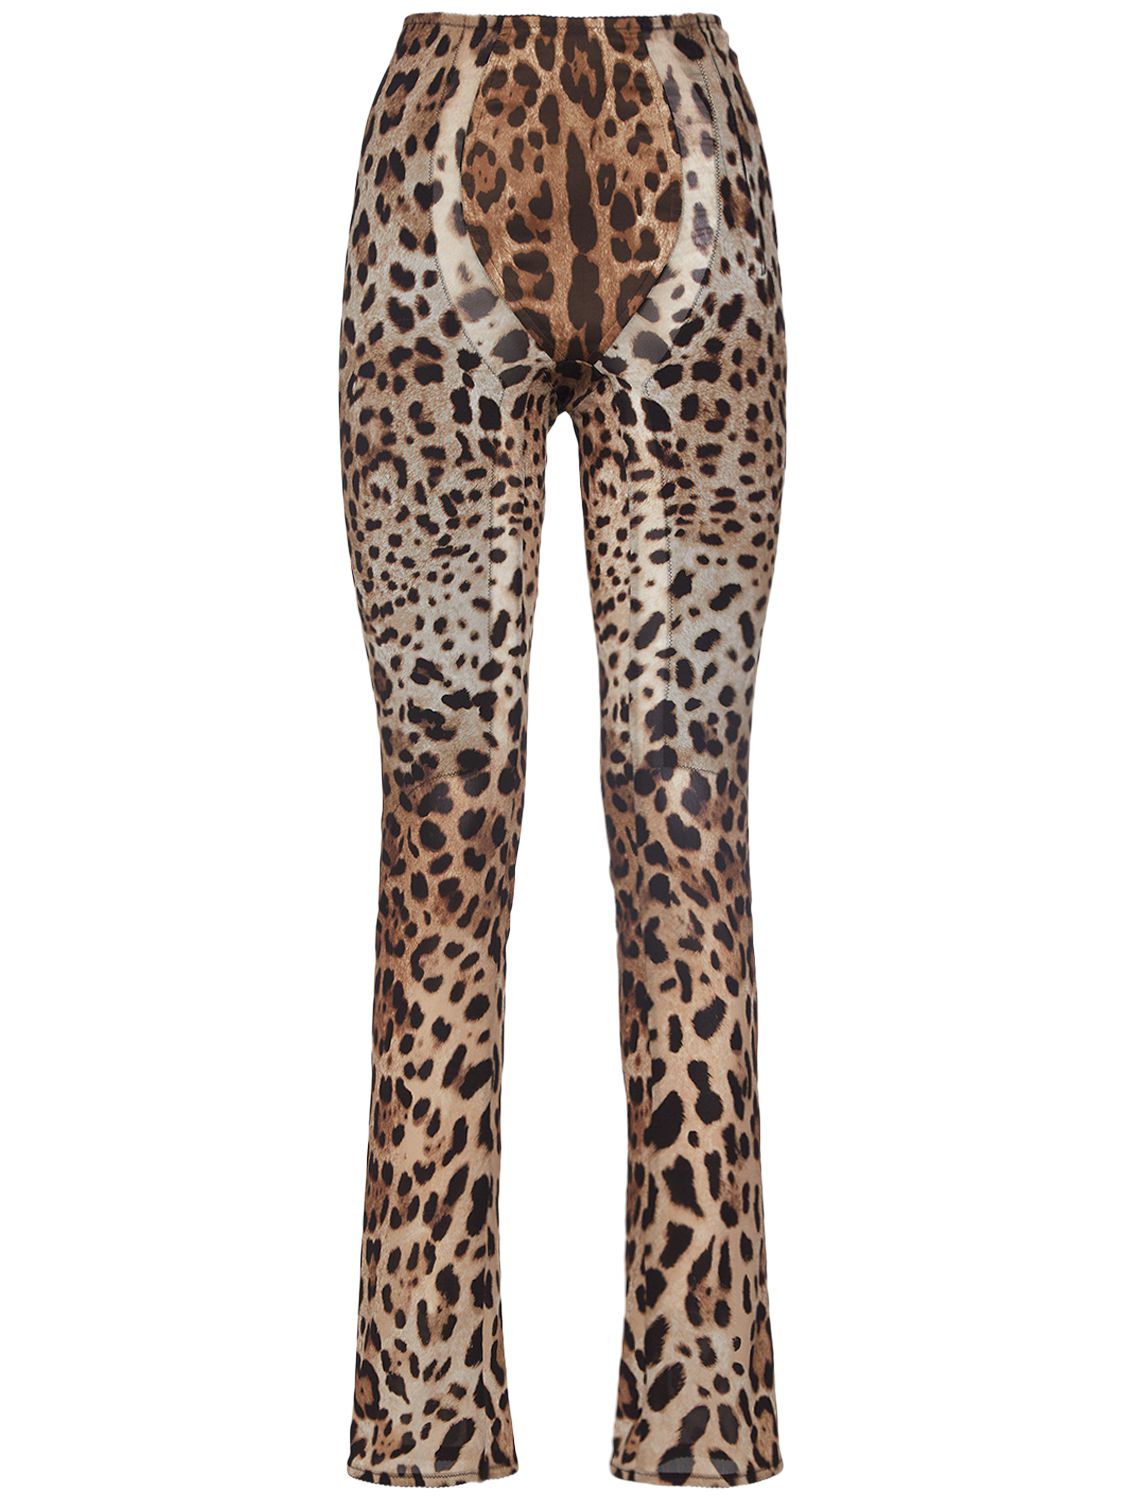 Leopard Print Stretch Straight Pants